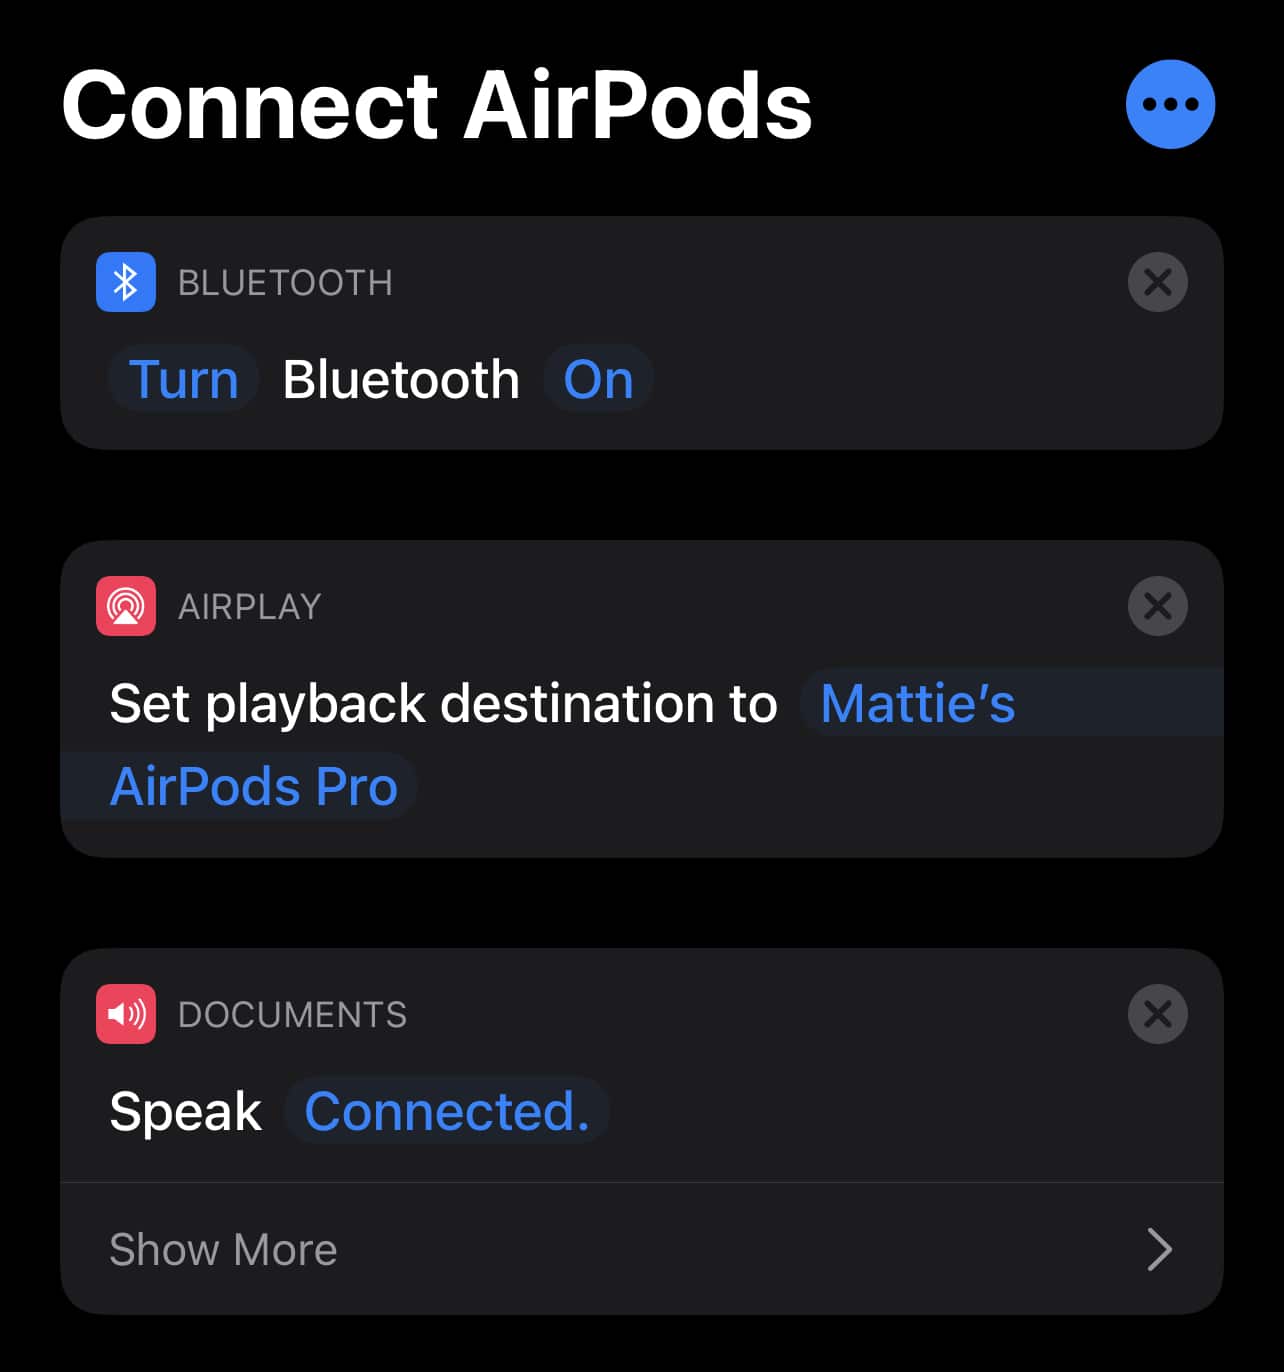 A screenshot of my "Connect AirPods" shortcut, described below.